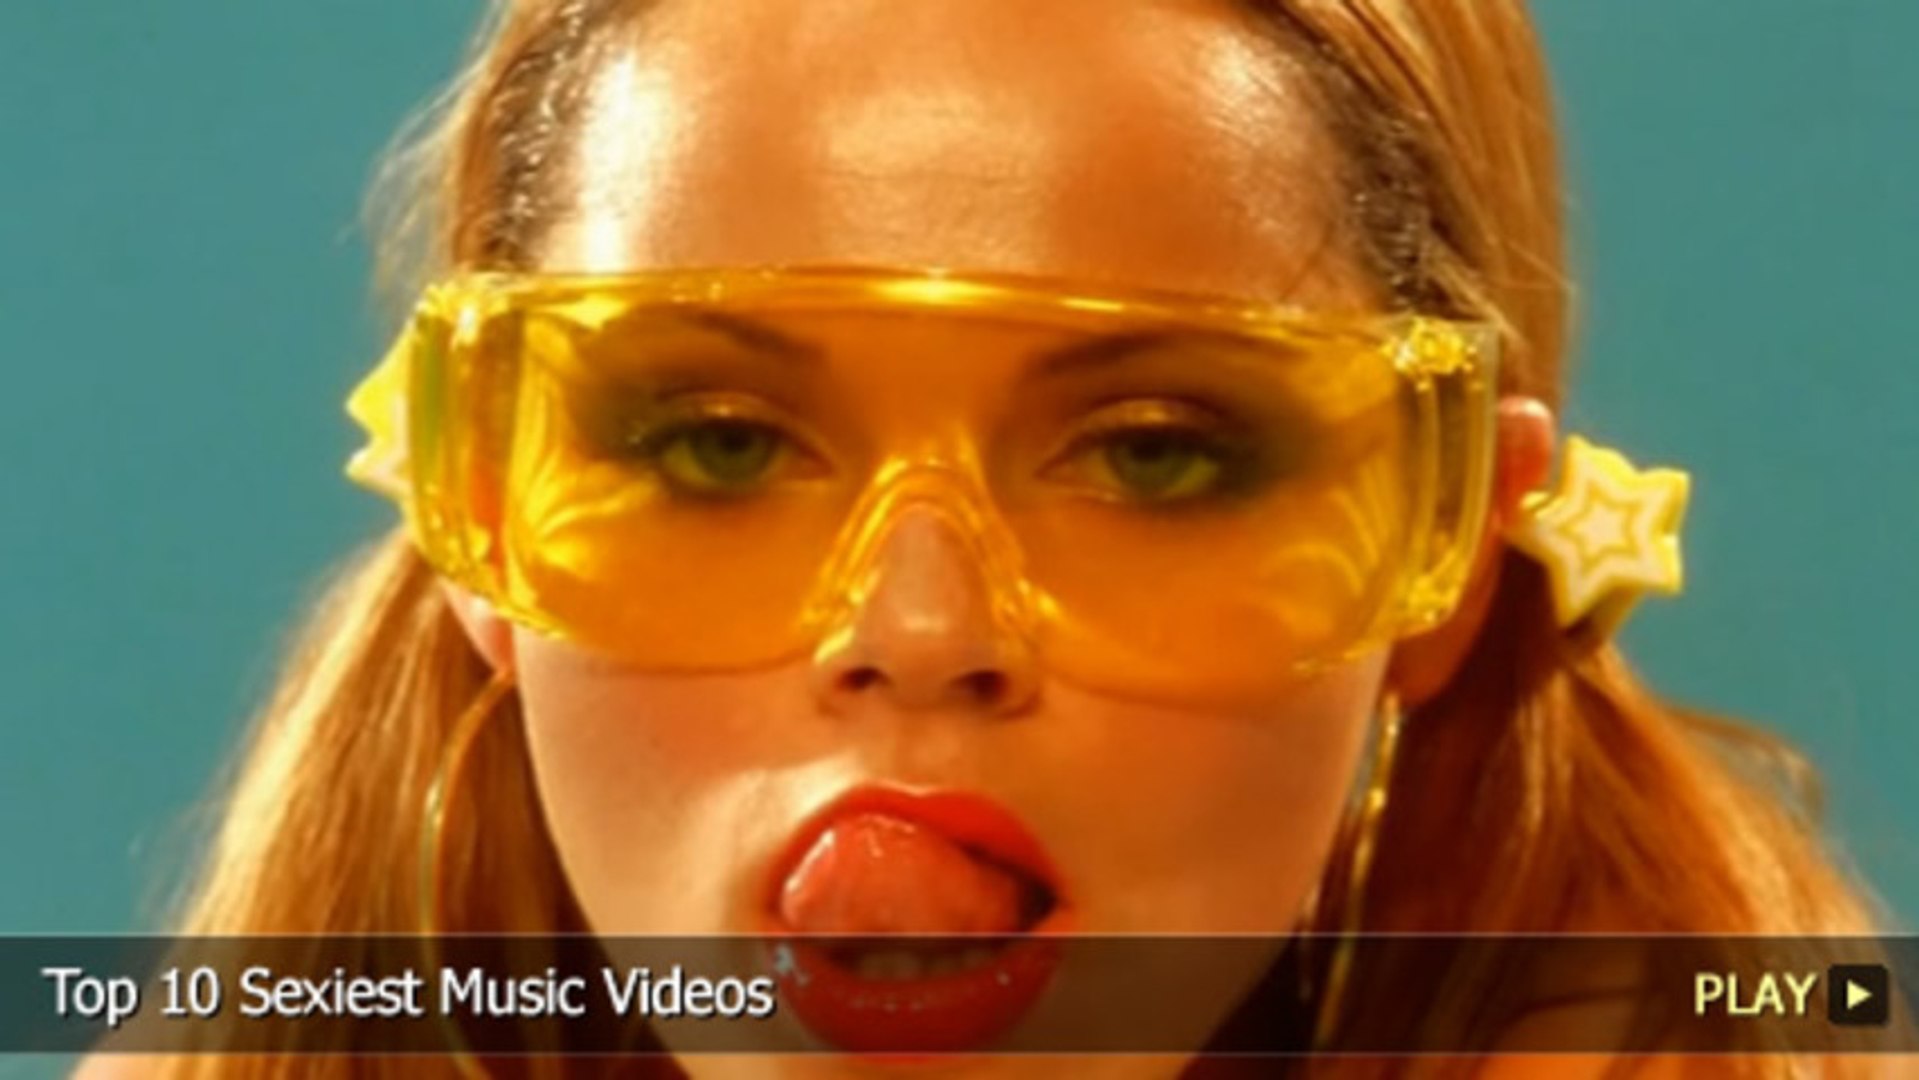 Top 10 Sexiest Music Videos